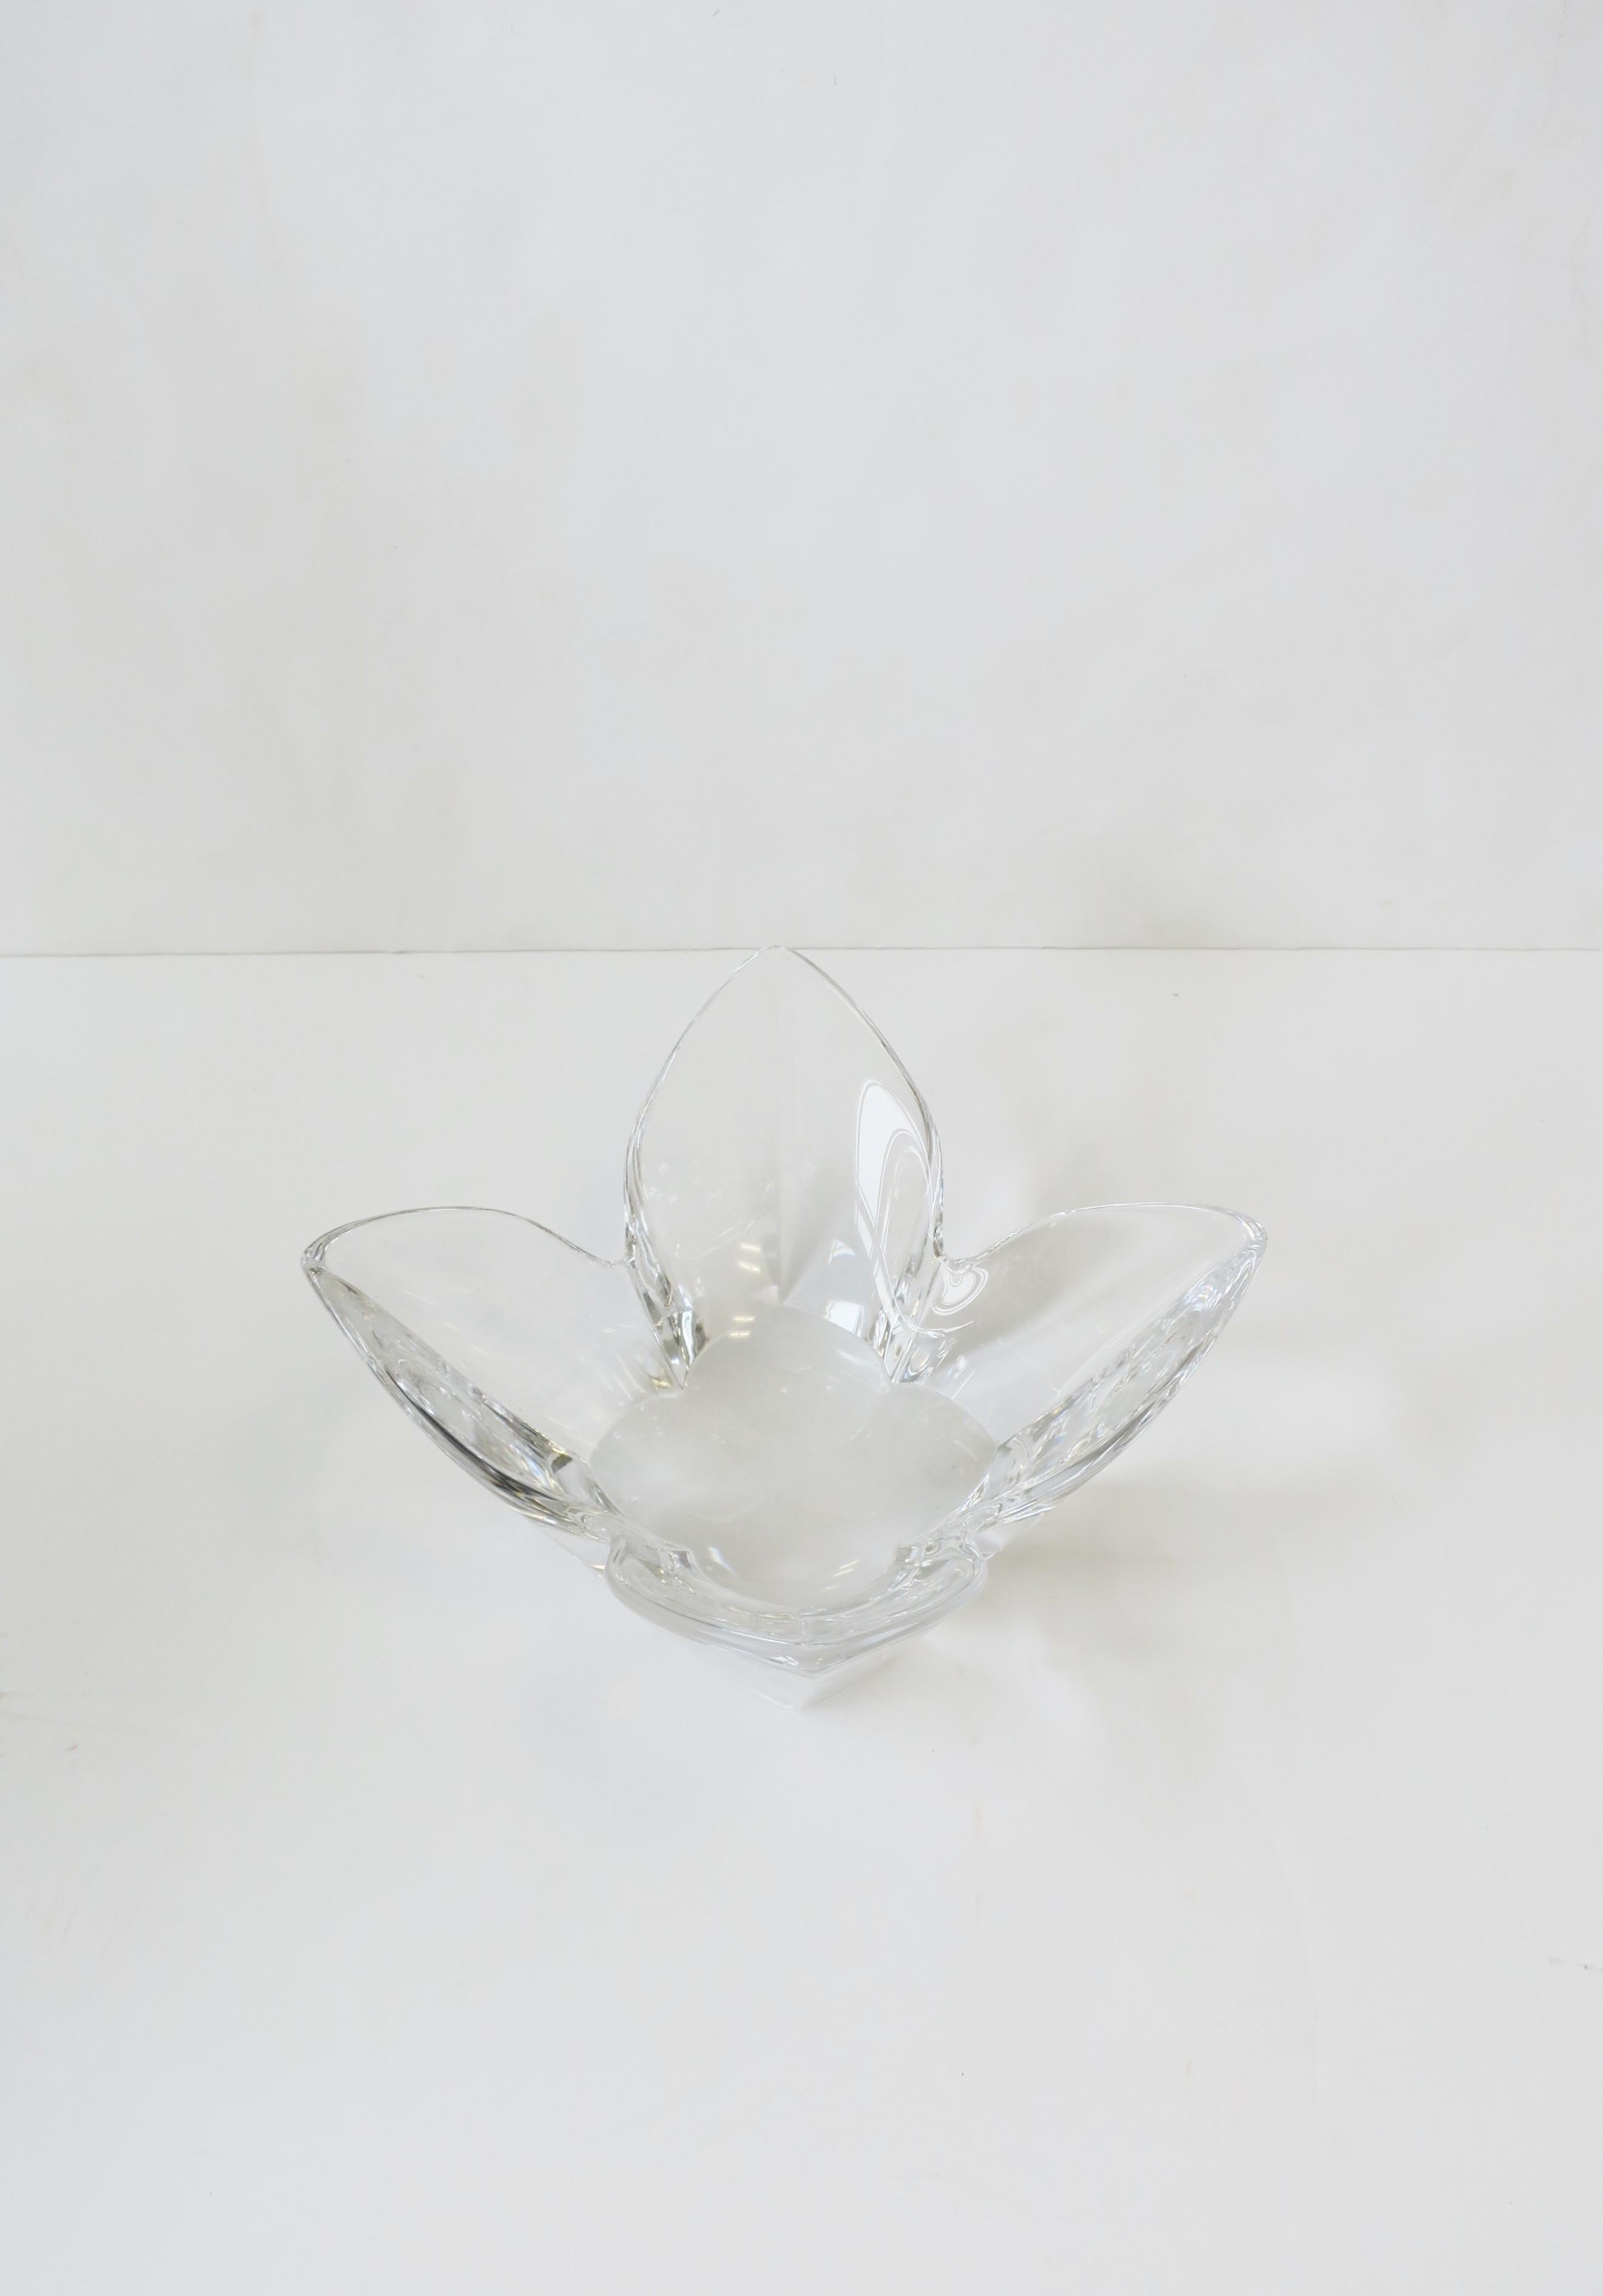 Organic Modern Scandinavian Modern Crystal Lotus Bowl by Designer Lars Hellsten For Sale